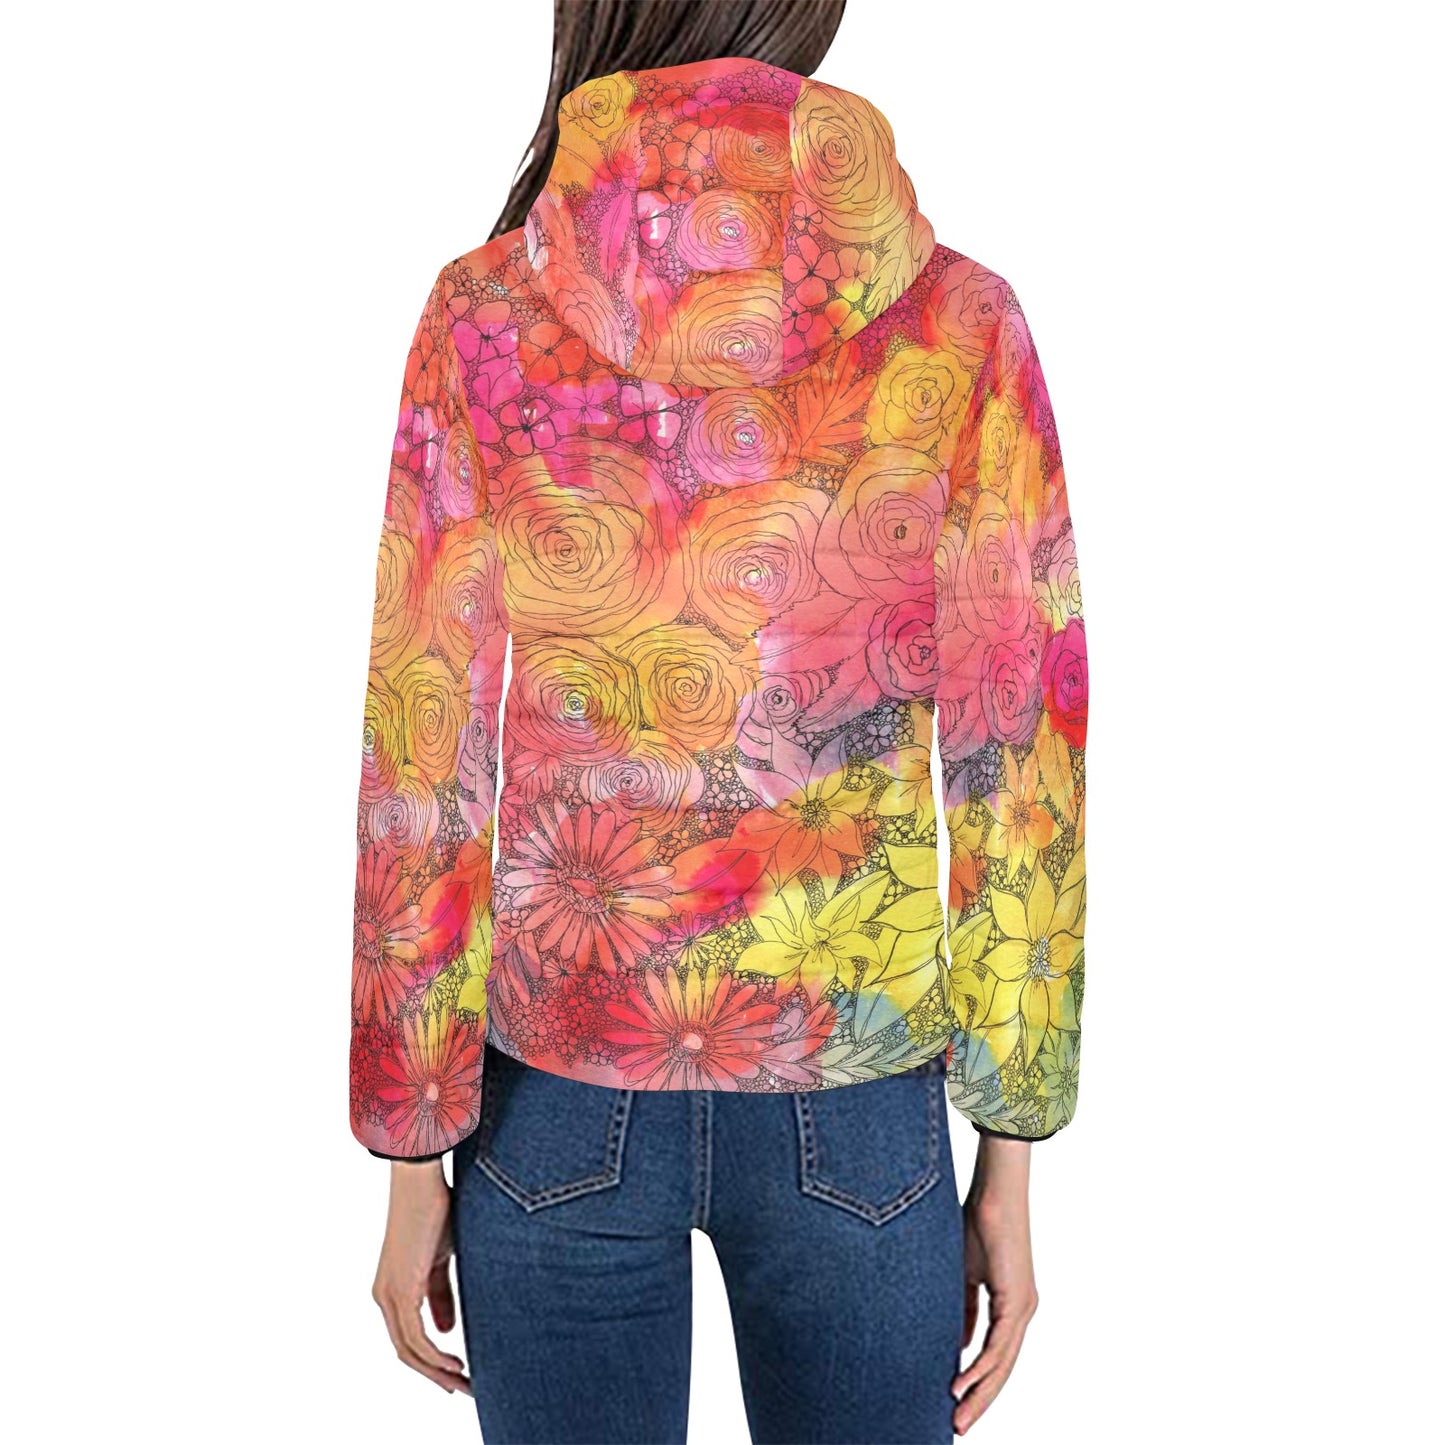 Inked Flowers - Women's Padded Hooded Jacket